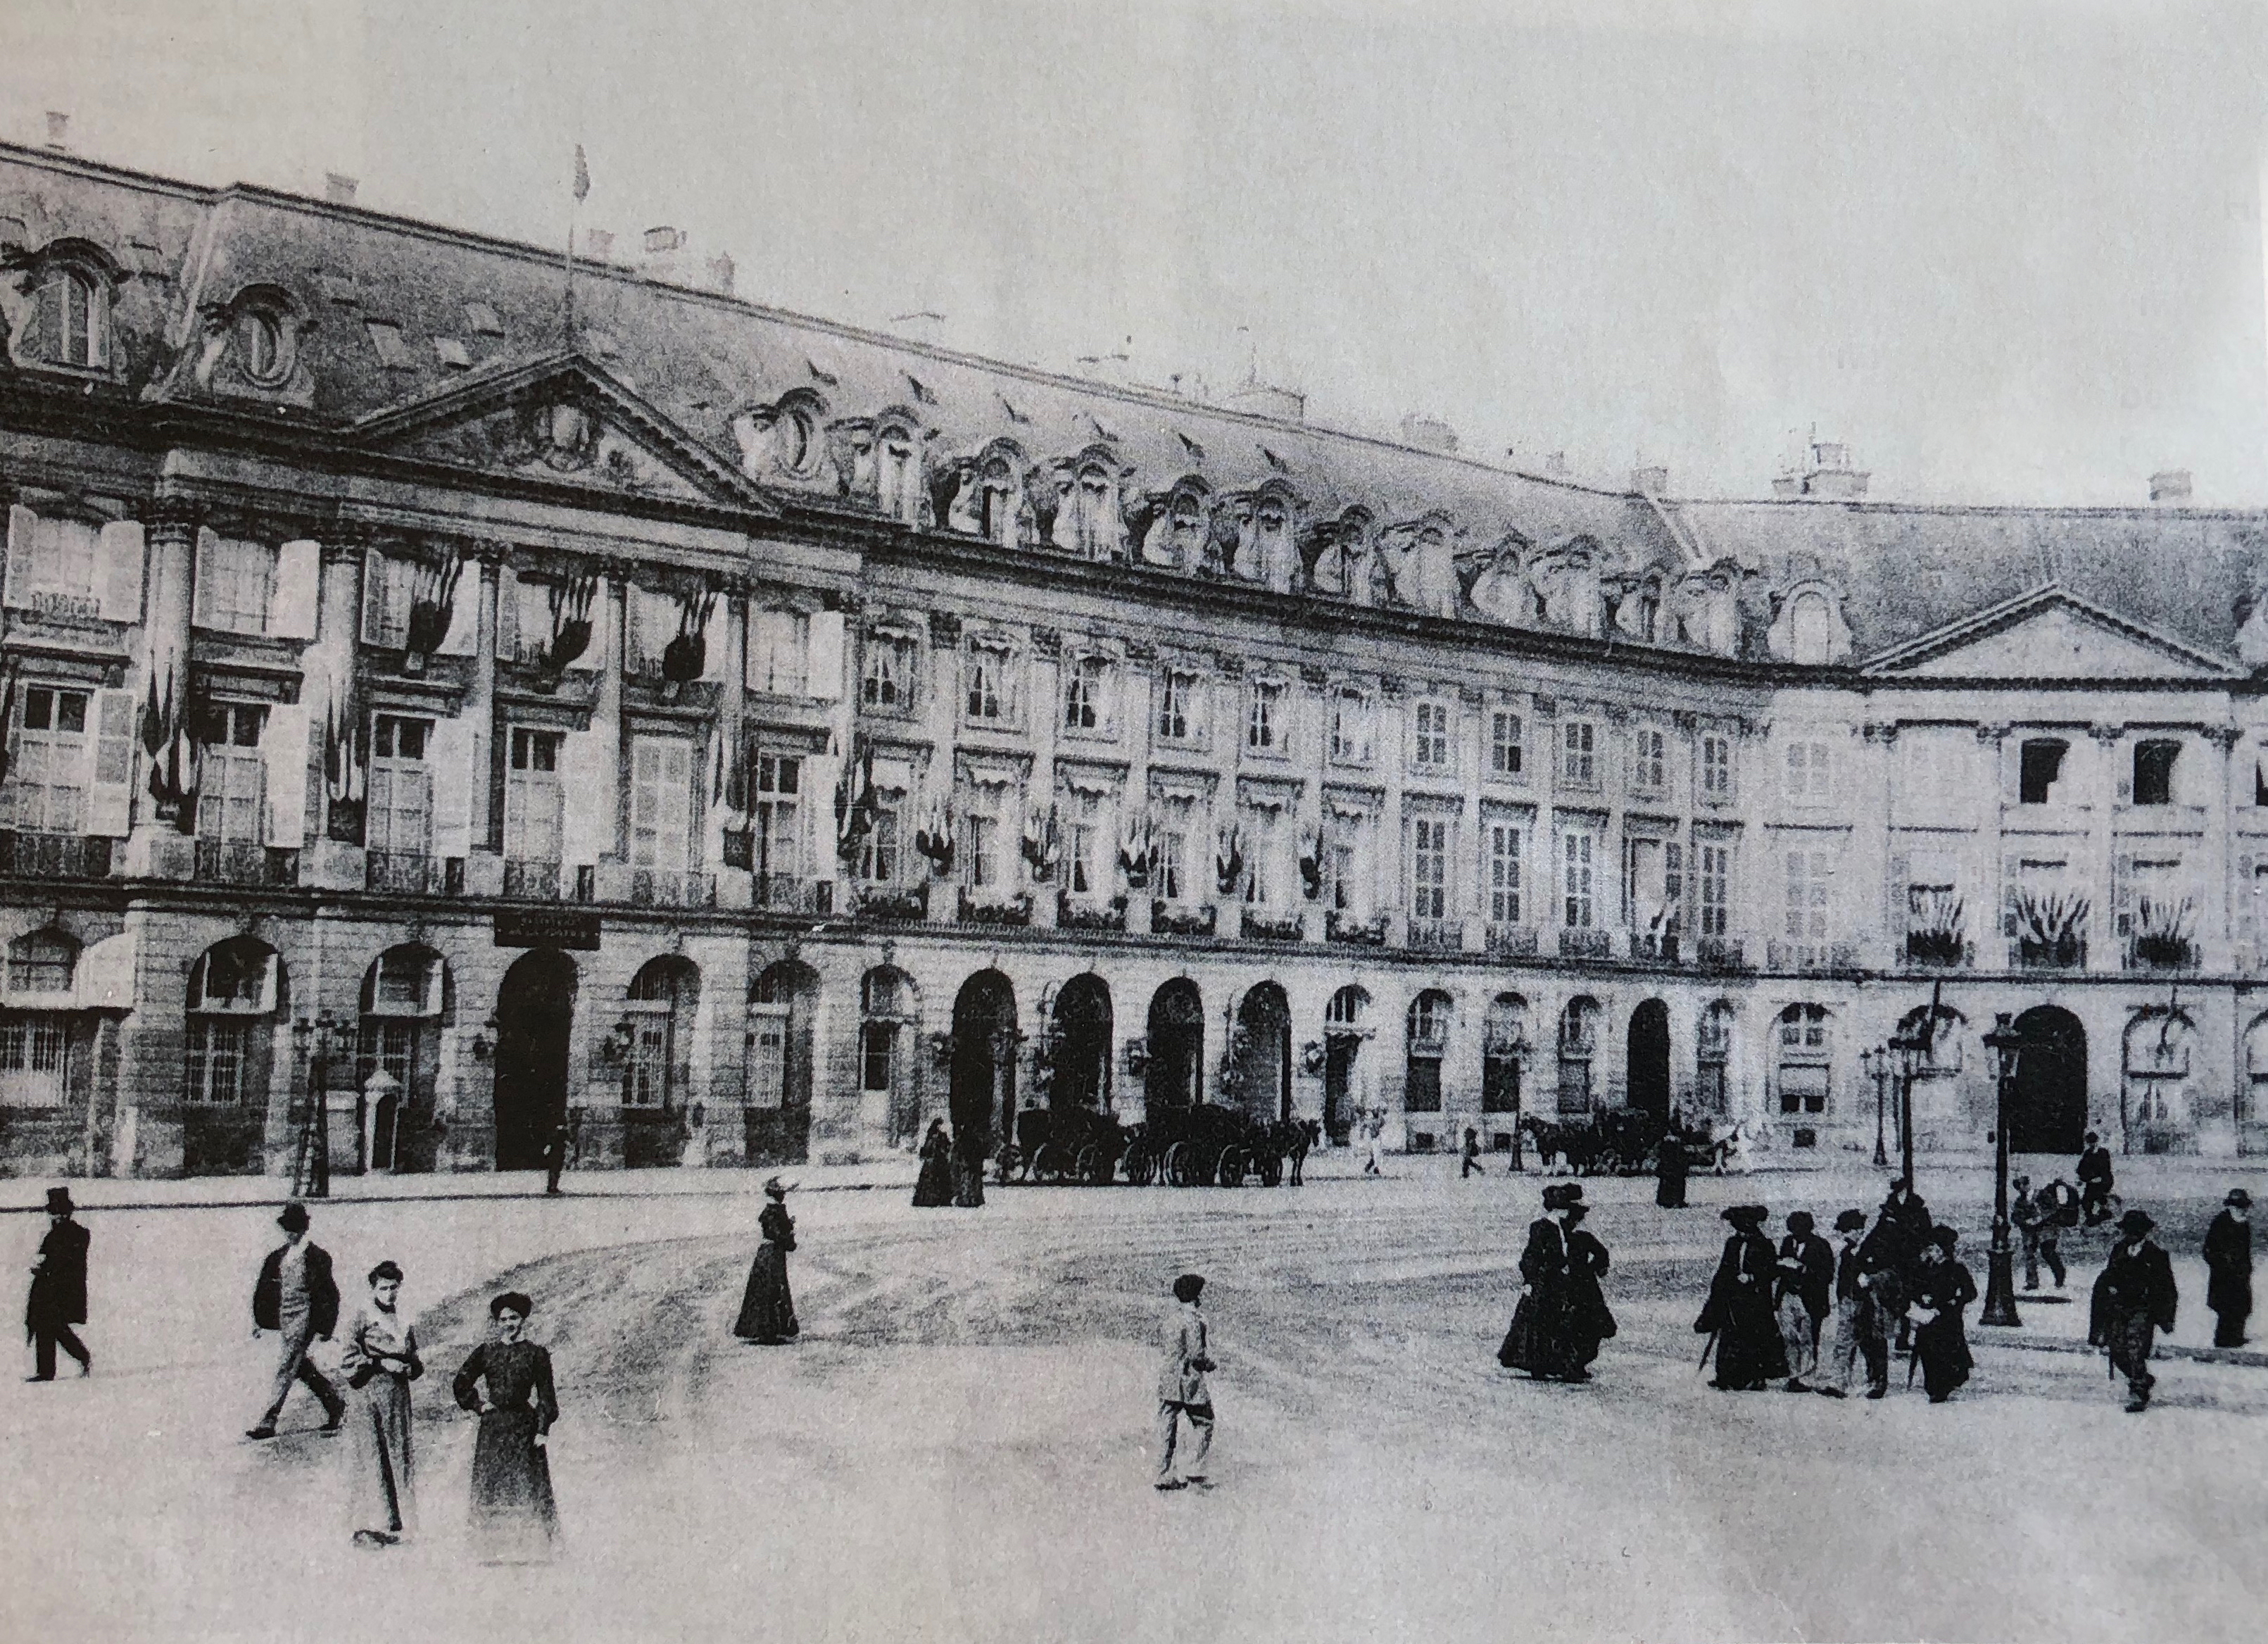 File:Place Vendôme - Hôtel Ritz (Paris).jpg - Wikimedia Commons